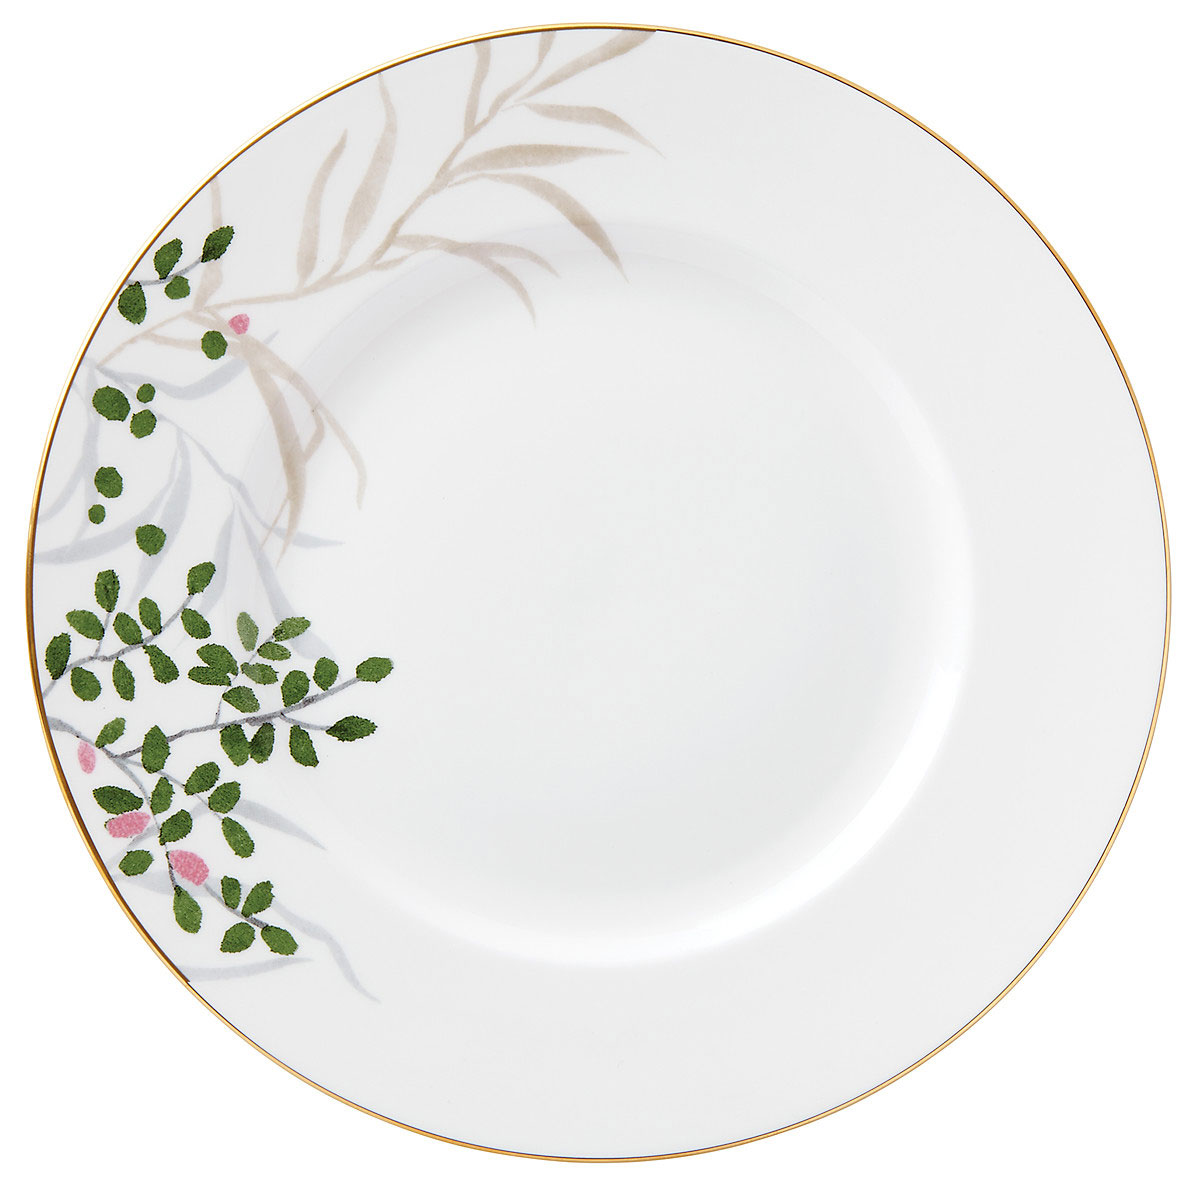 Kate Spade China by Lenox, Birch Way Dinner Plate